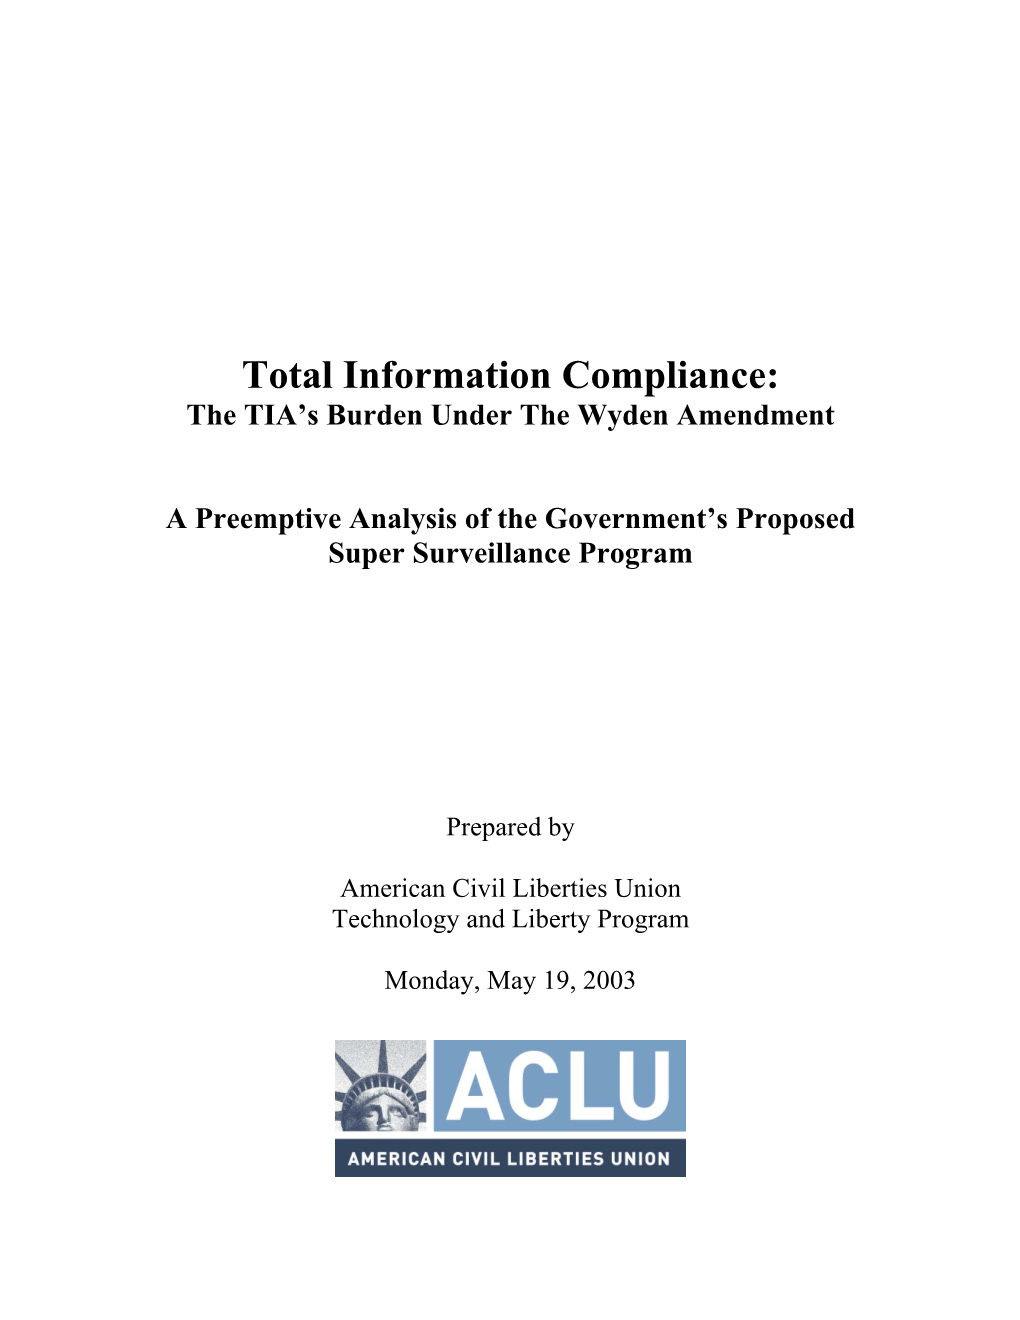 Total Information Compliance: the TIA’S Burden Under the Wyden Amendment